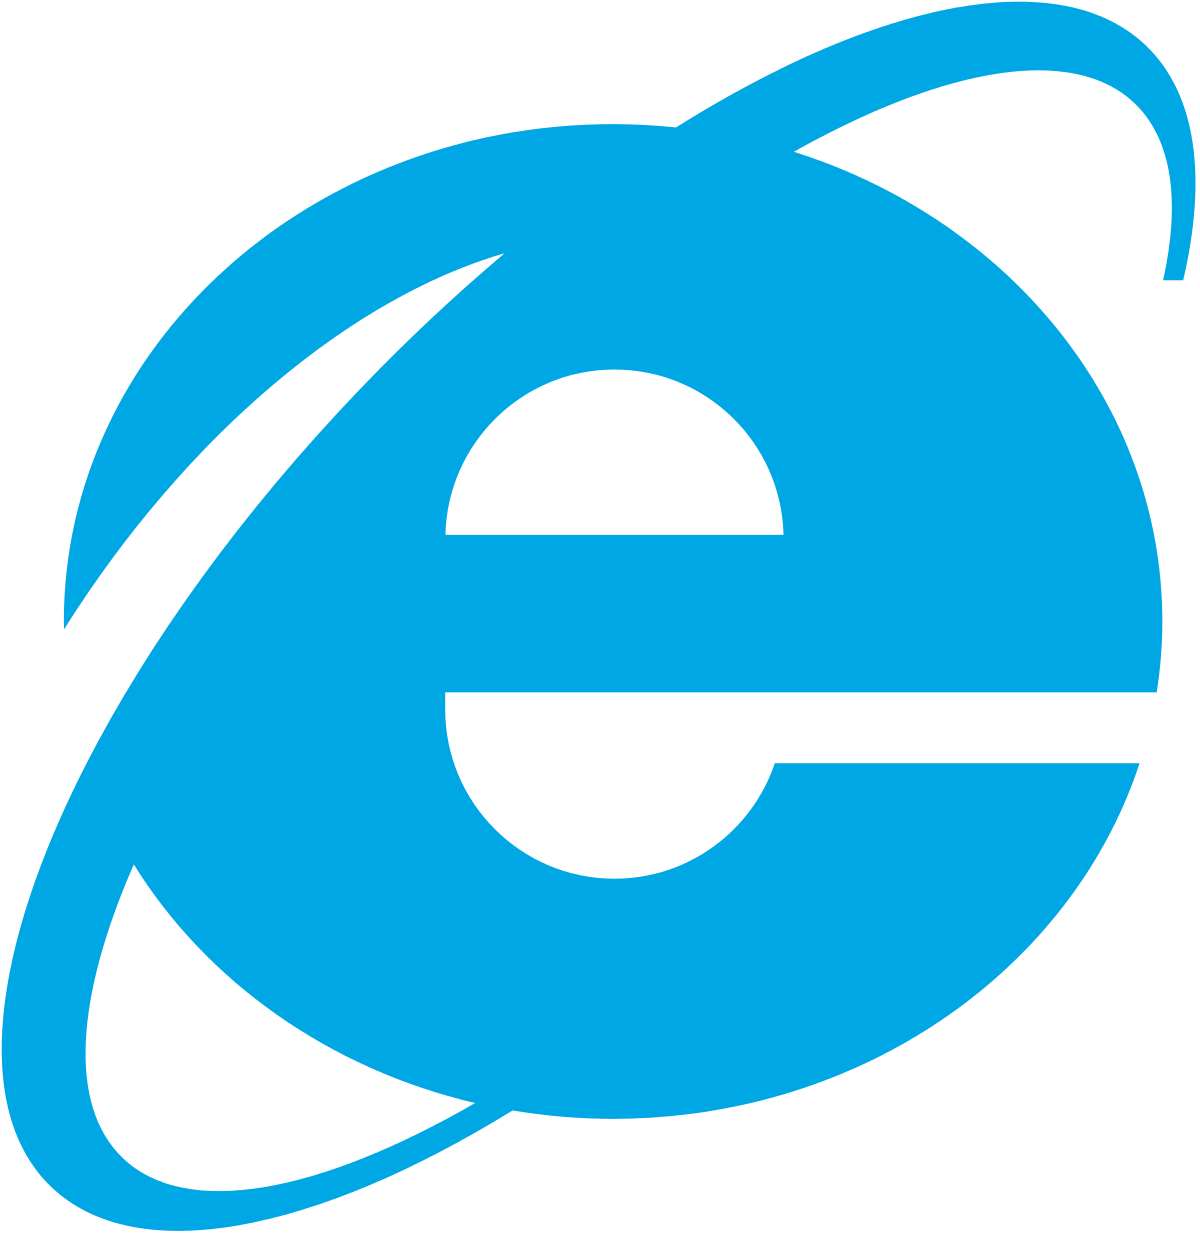 Microsoft “entierra” a Internet Explorer